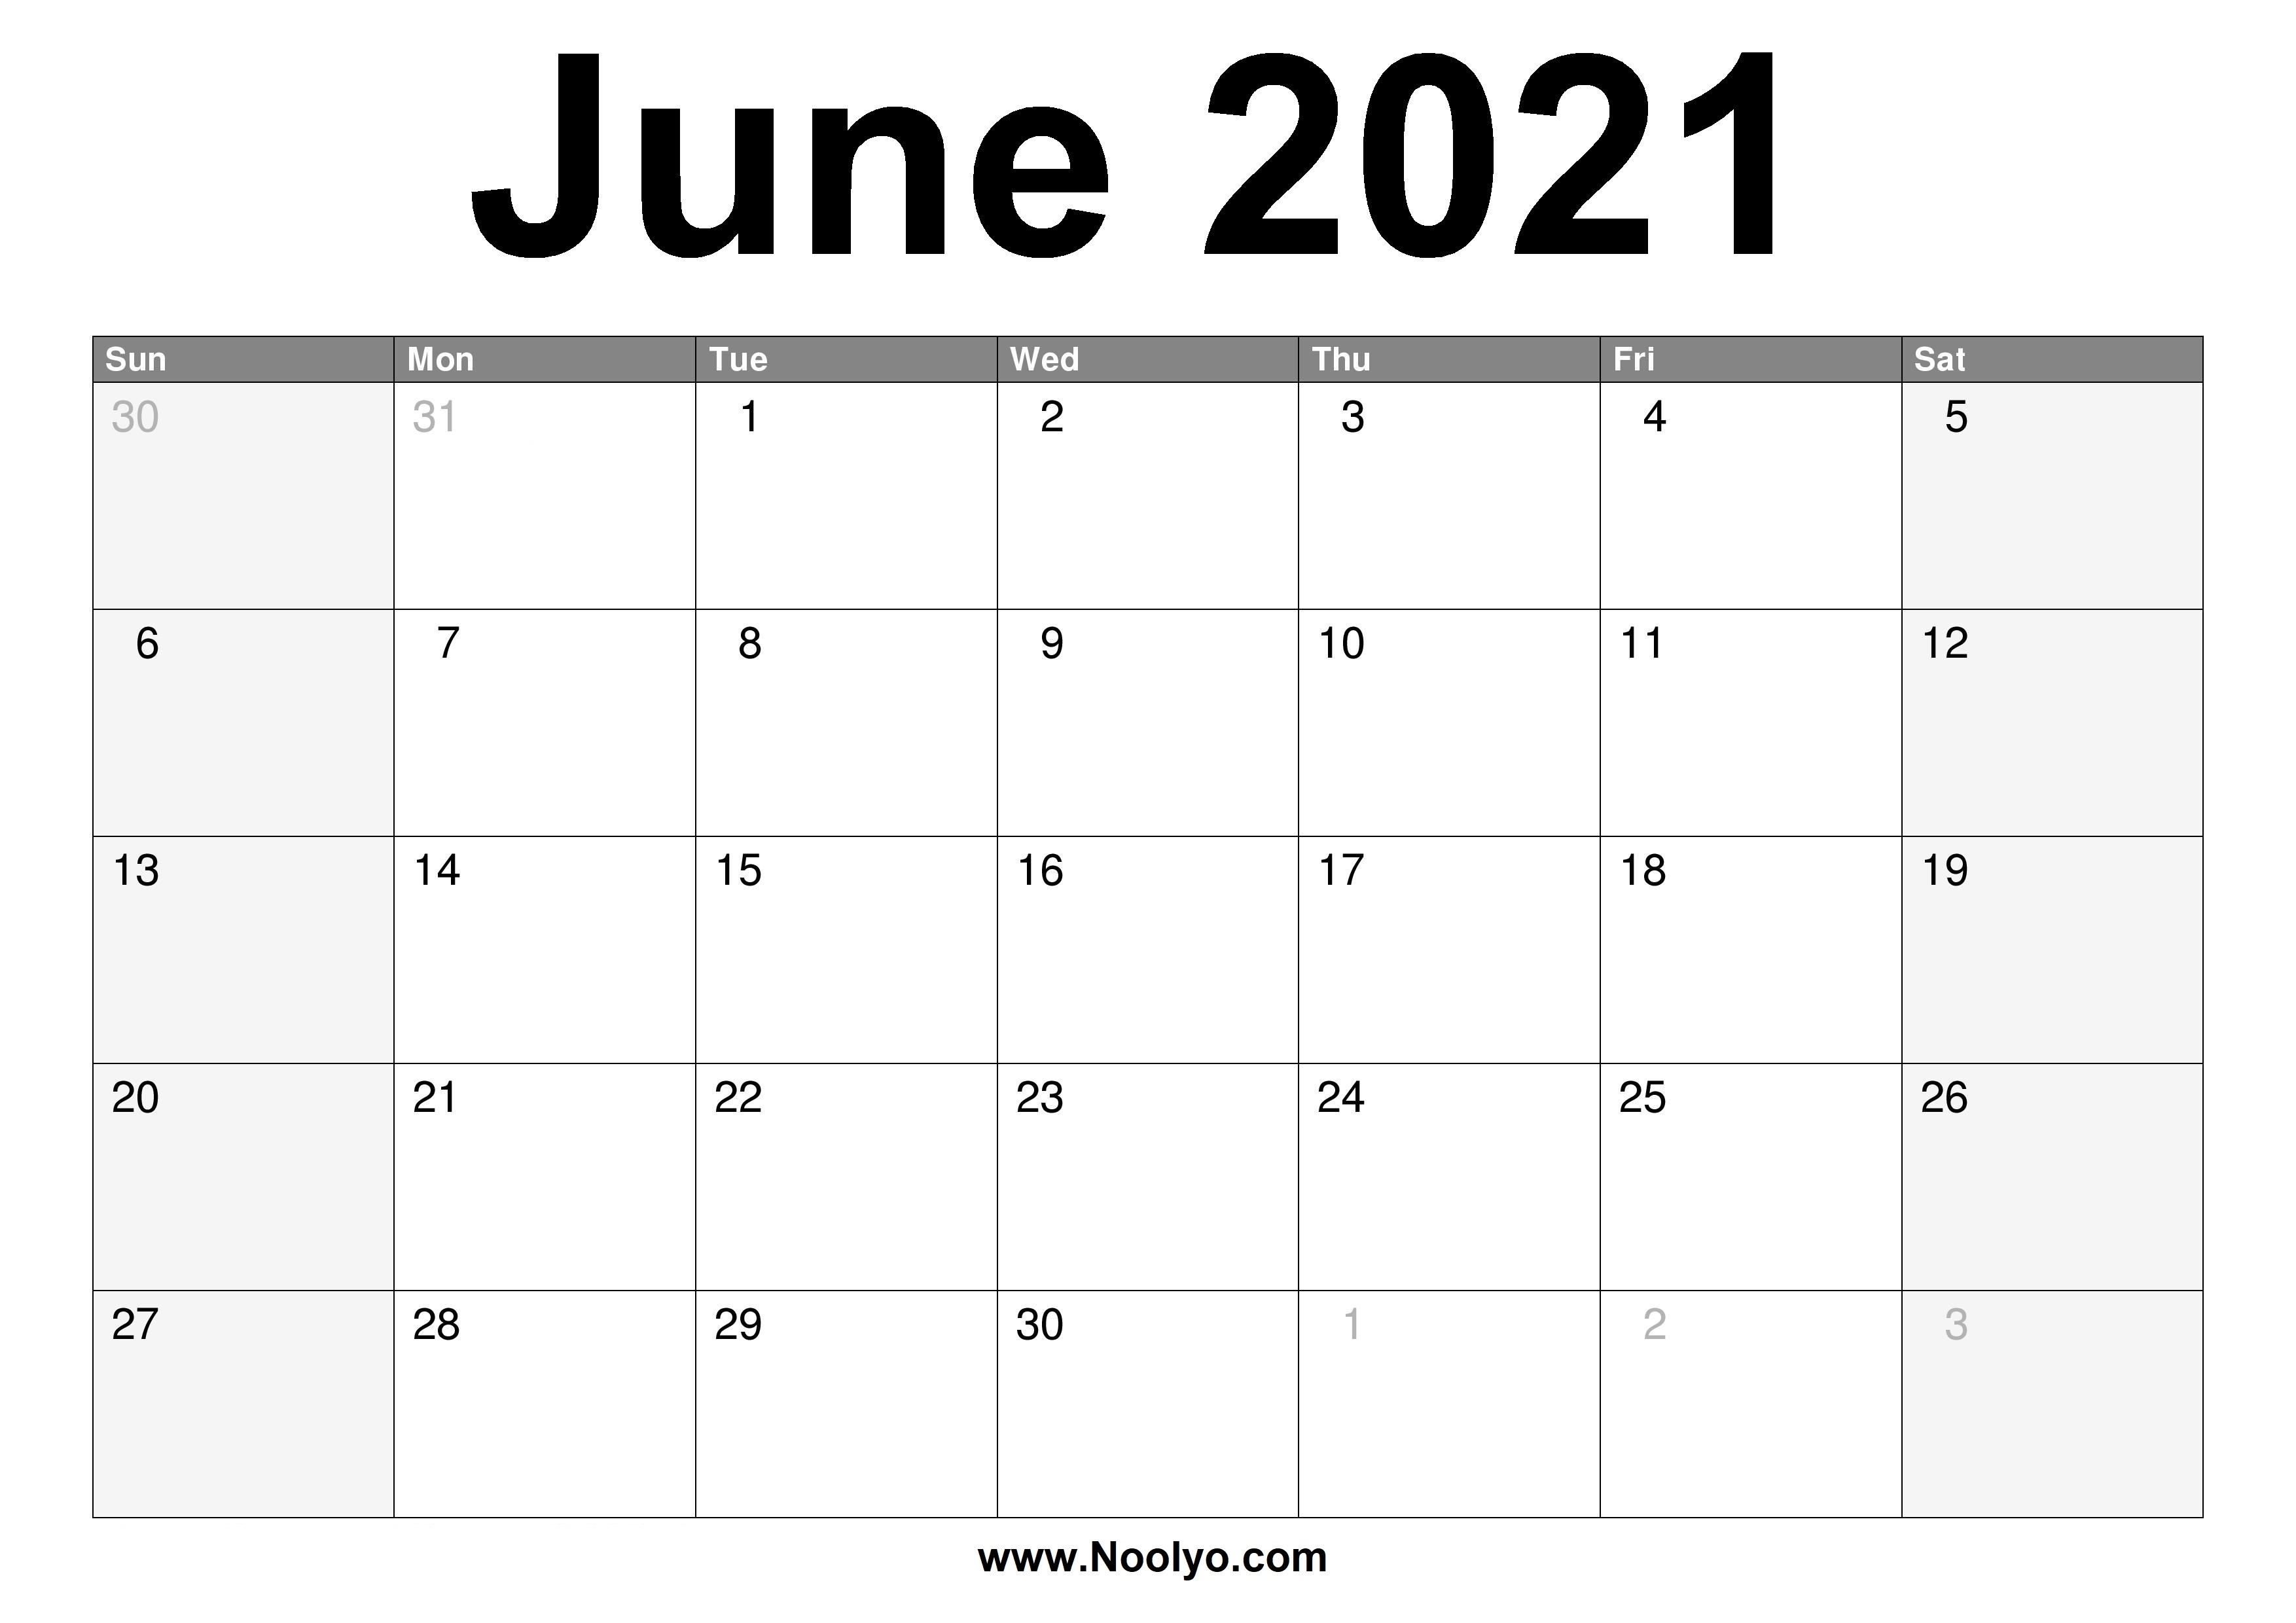 June 2021 Calendar Printable – Free Download – Noolyo June 2021 Printable Monthly Calendar With Lines